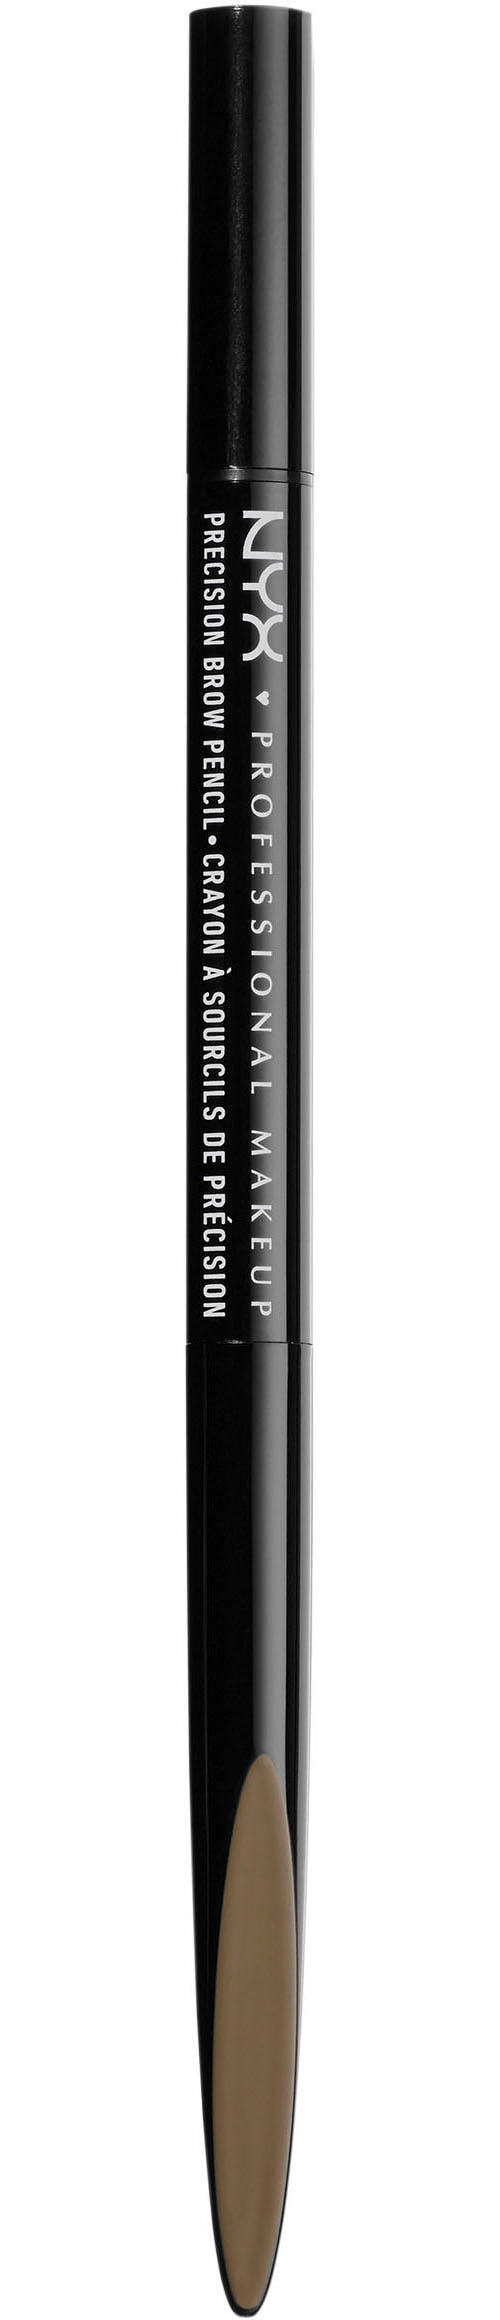 Brow bestellen Makeup NYX »Professional Augenbrauen-Stift online Pencil« Precision